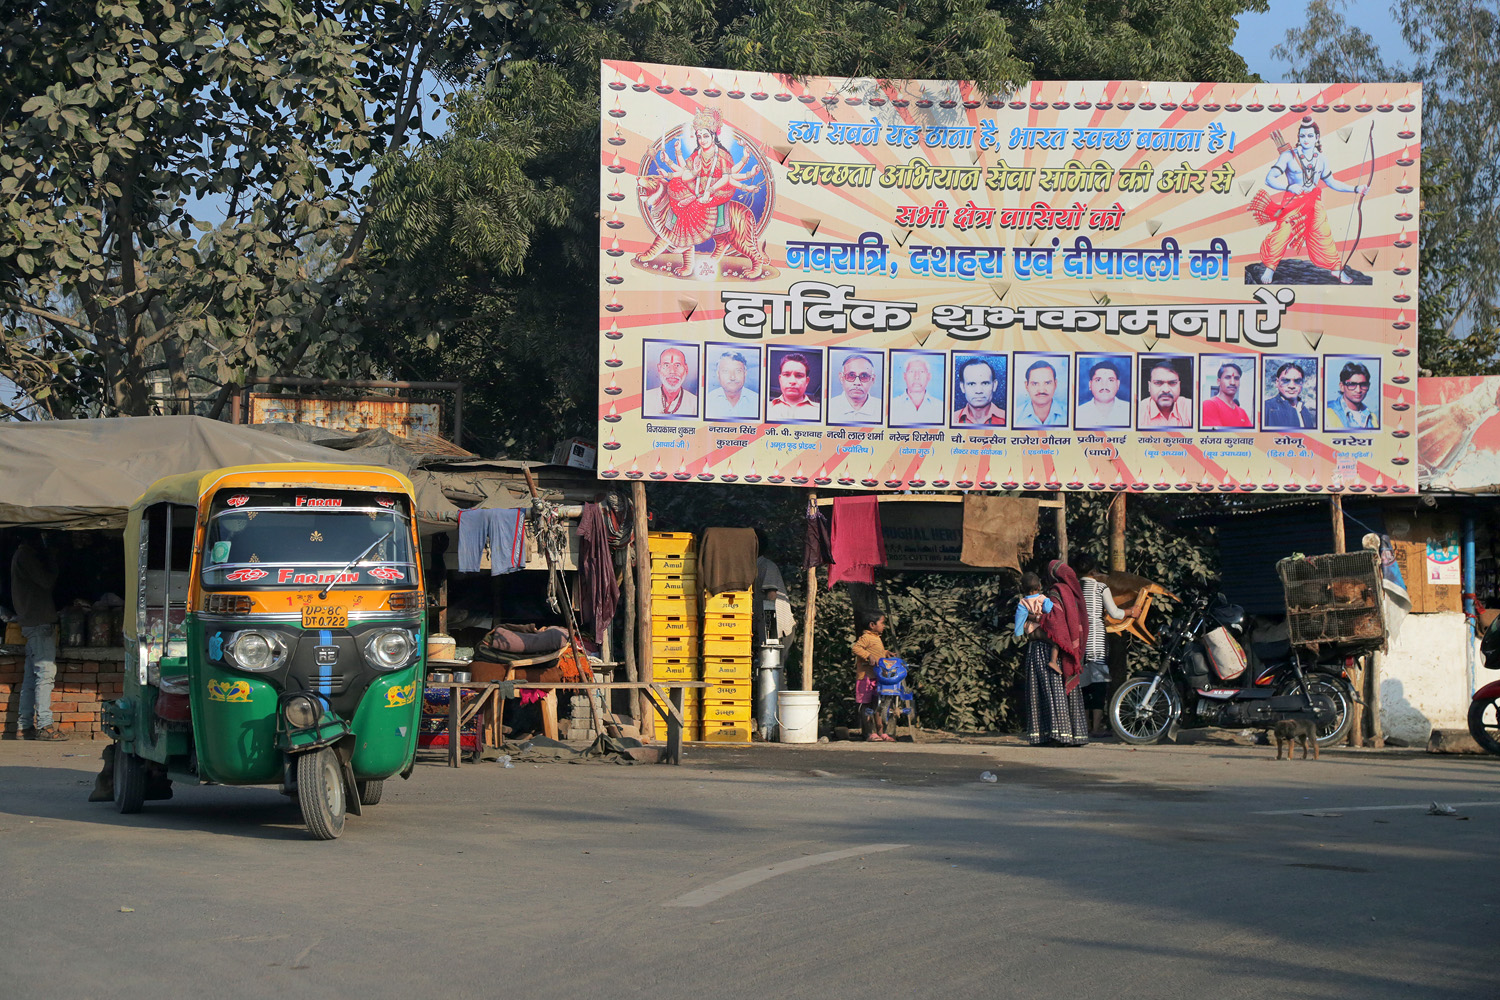 bill-hocker-campaign-billboard?-agra-india-2018